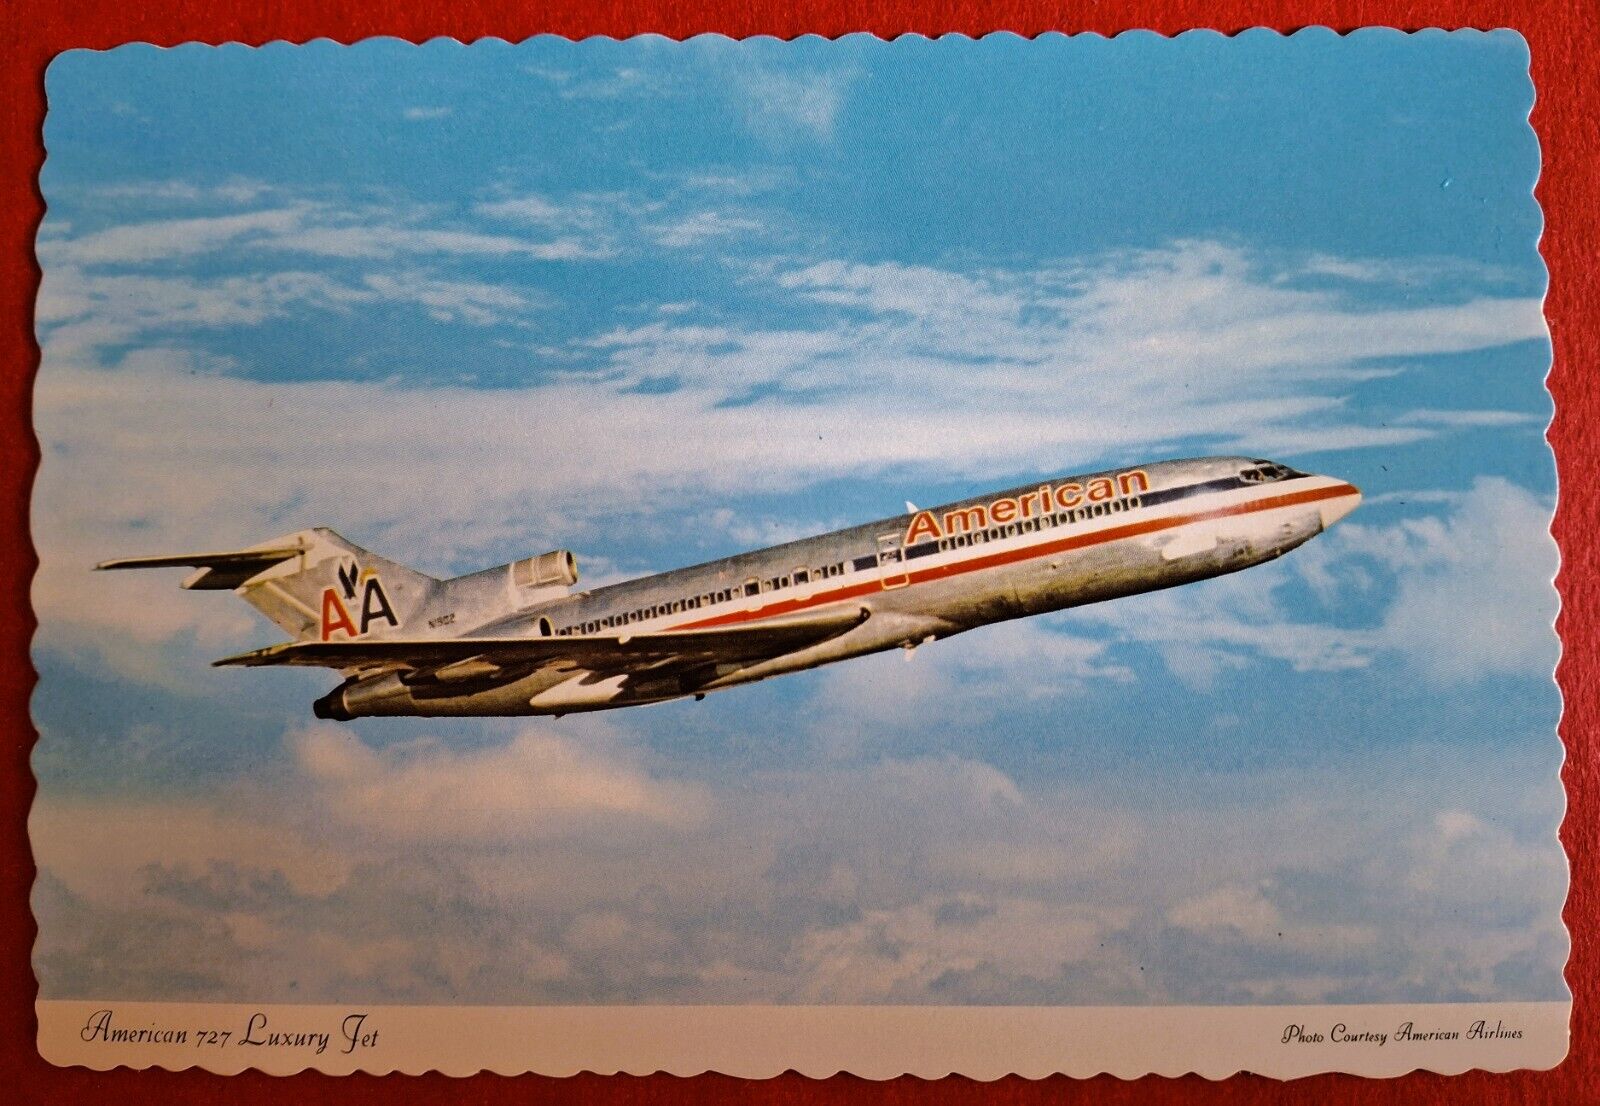 American Airlines Postcard Boeing 727 inflight